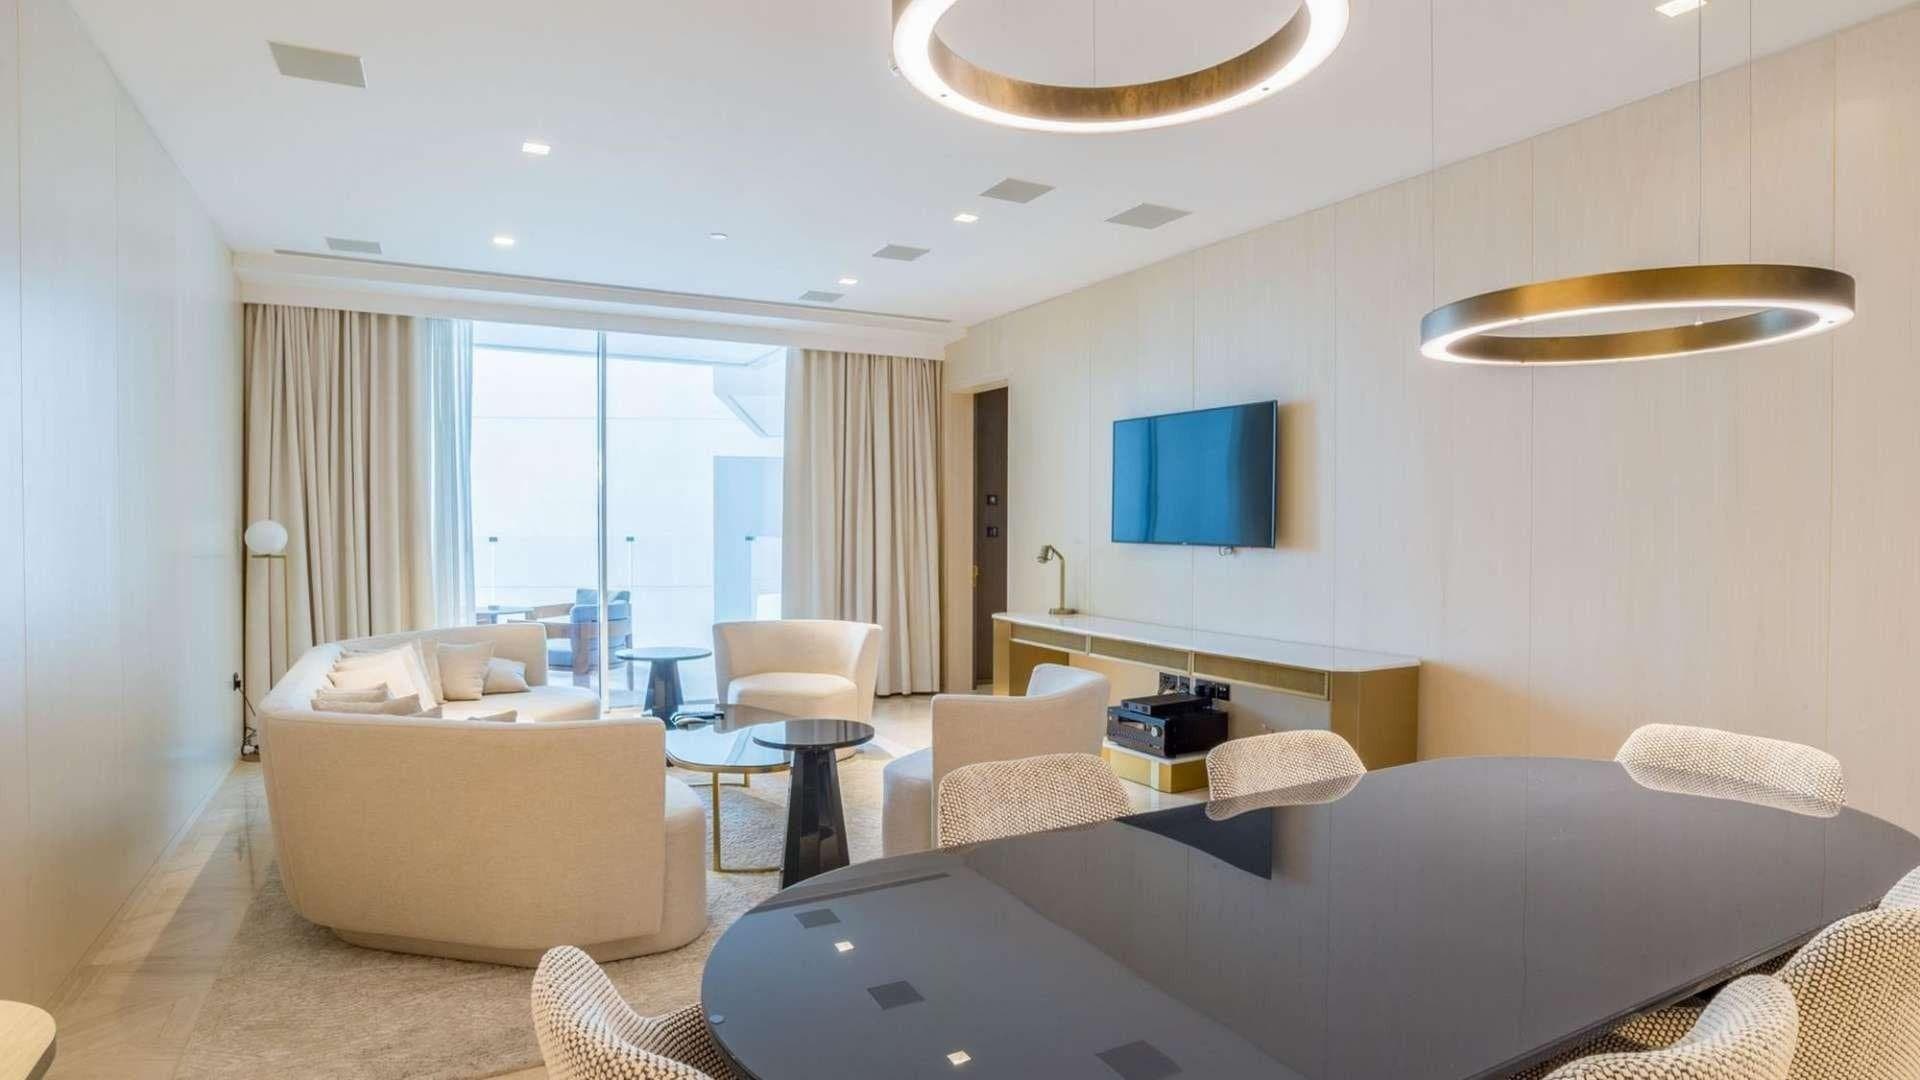 2 Bedroom Apartment For Rent Five Palm Jumeirah Lp07474 Cc920f50c231c00.jpg